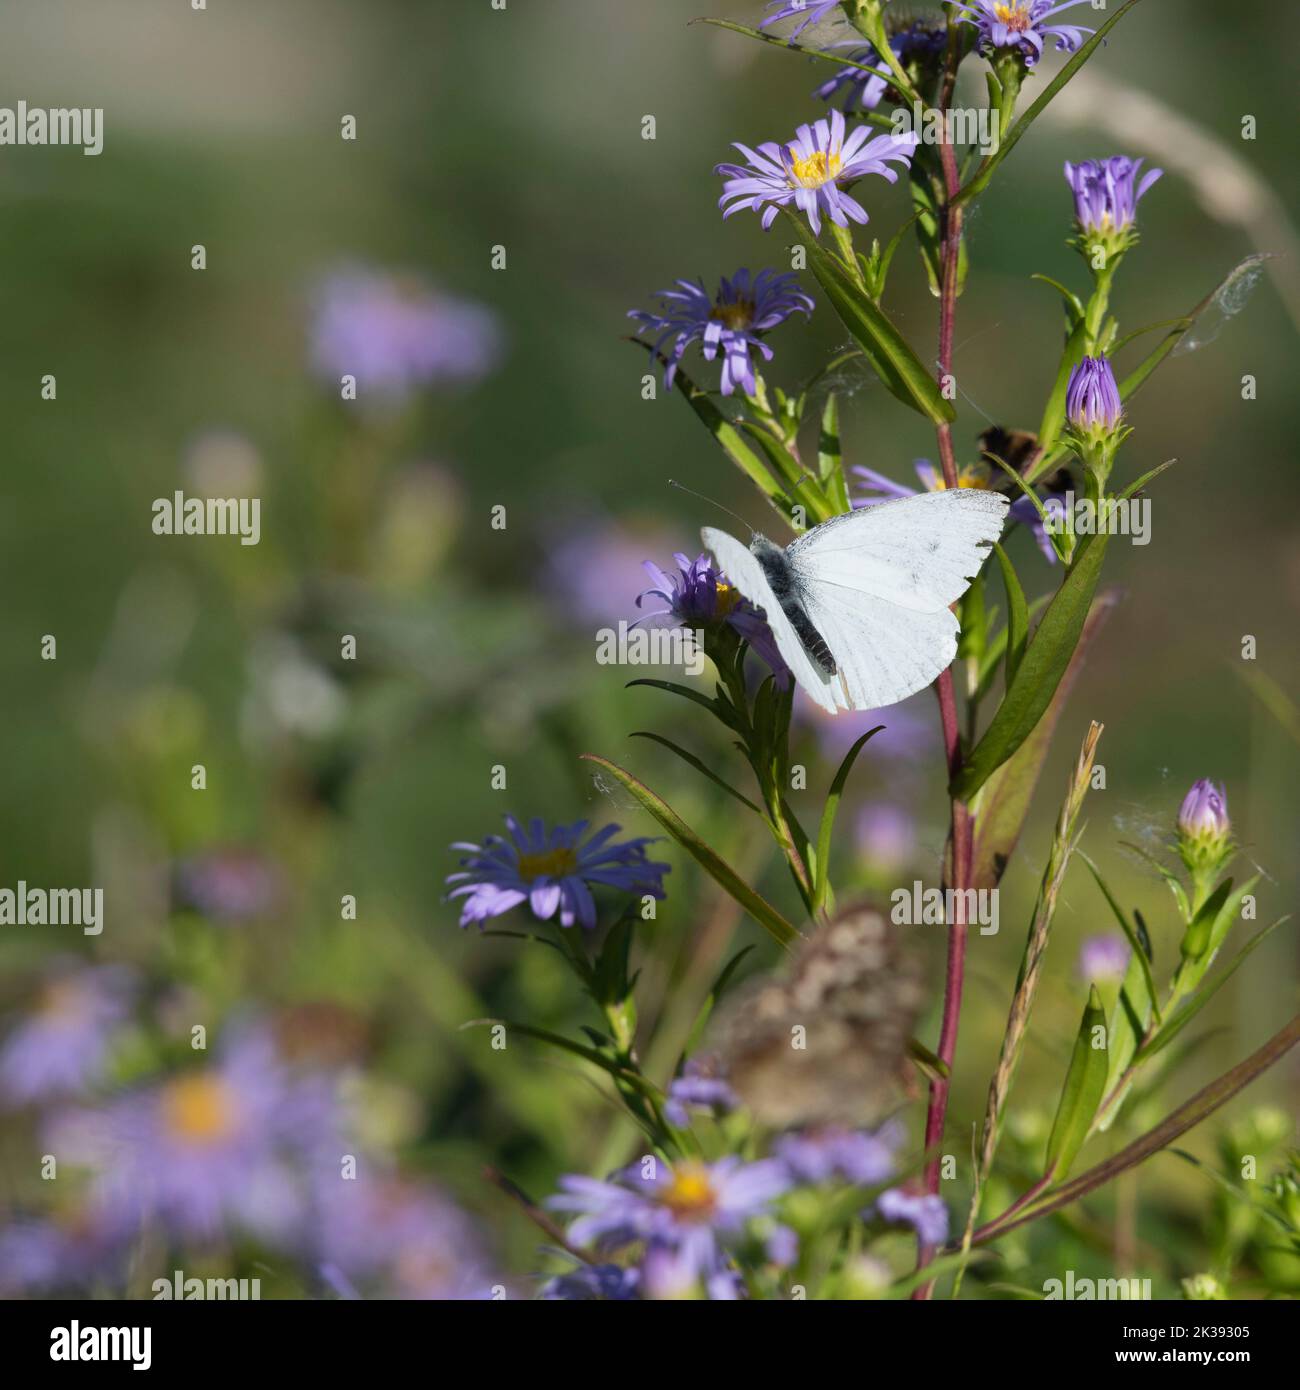 A Small White Butterfly (Pieris Rapae) Feeding on a Michaelmas Daisy Flower (Symphyotrichum Novi-Belgii) in Late Summer Sunshine Stock Photo